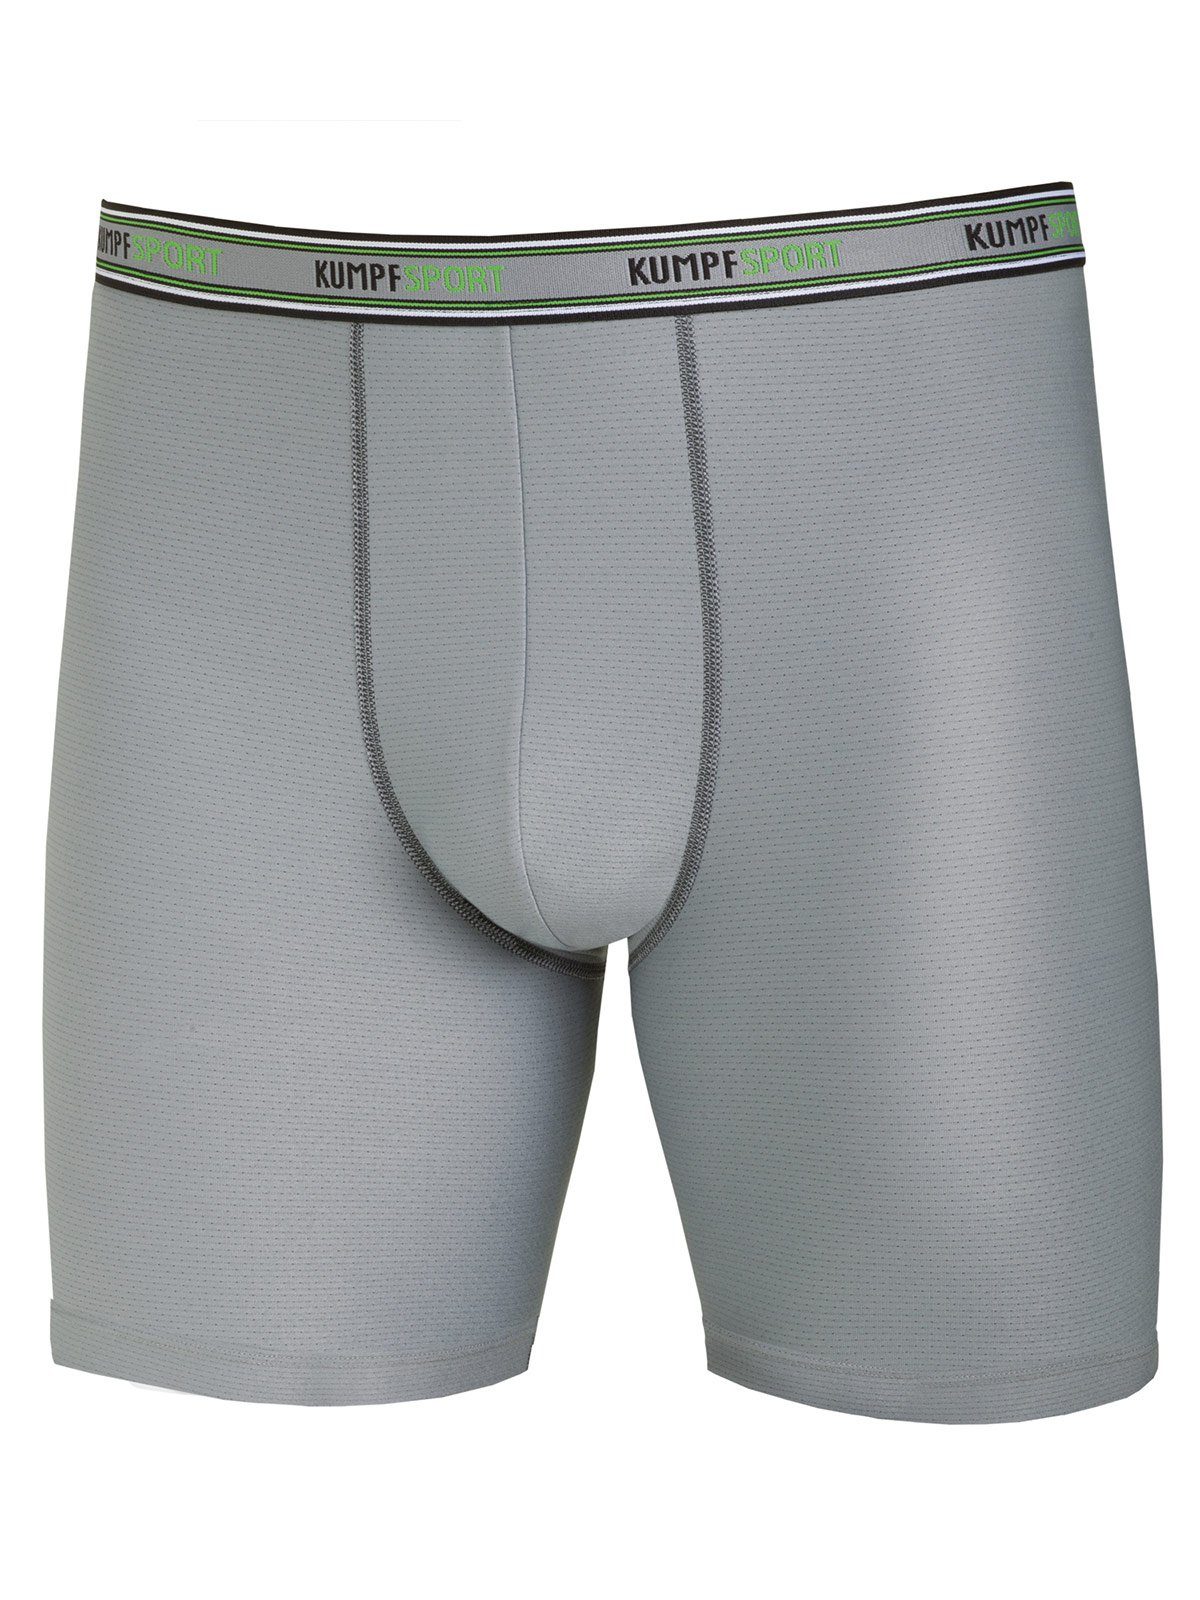 KUMPF Retro Pants Herren Gummibund 1-St) grau mit Pants und Materialmix Sportwä (Stück, Bein Tactel